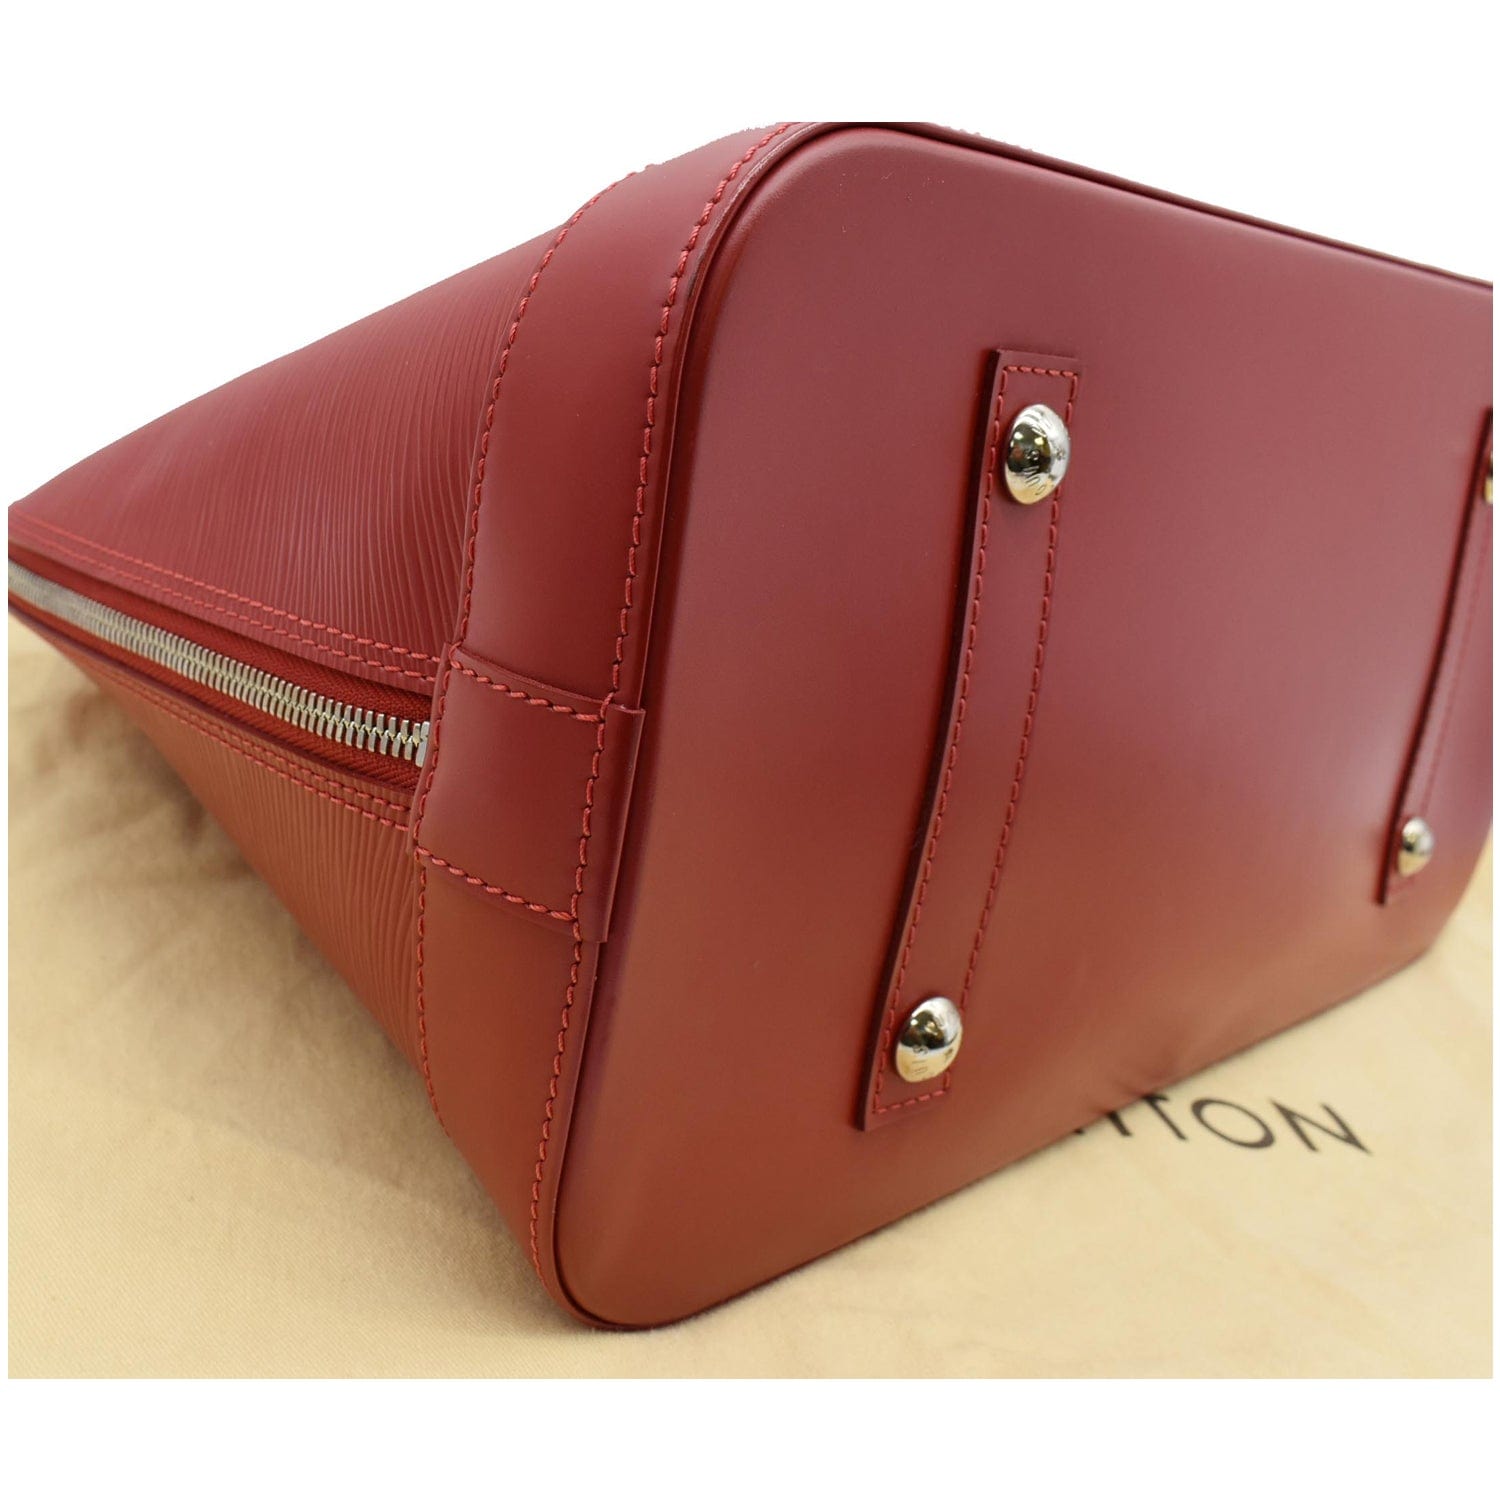 Alma leather handbag Louis Vuitton Brown in Leather - 32391385